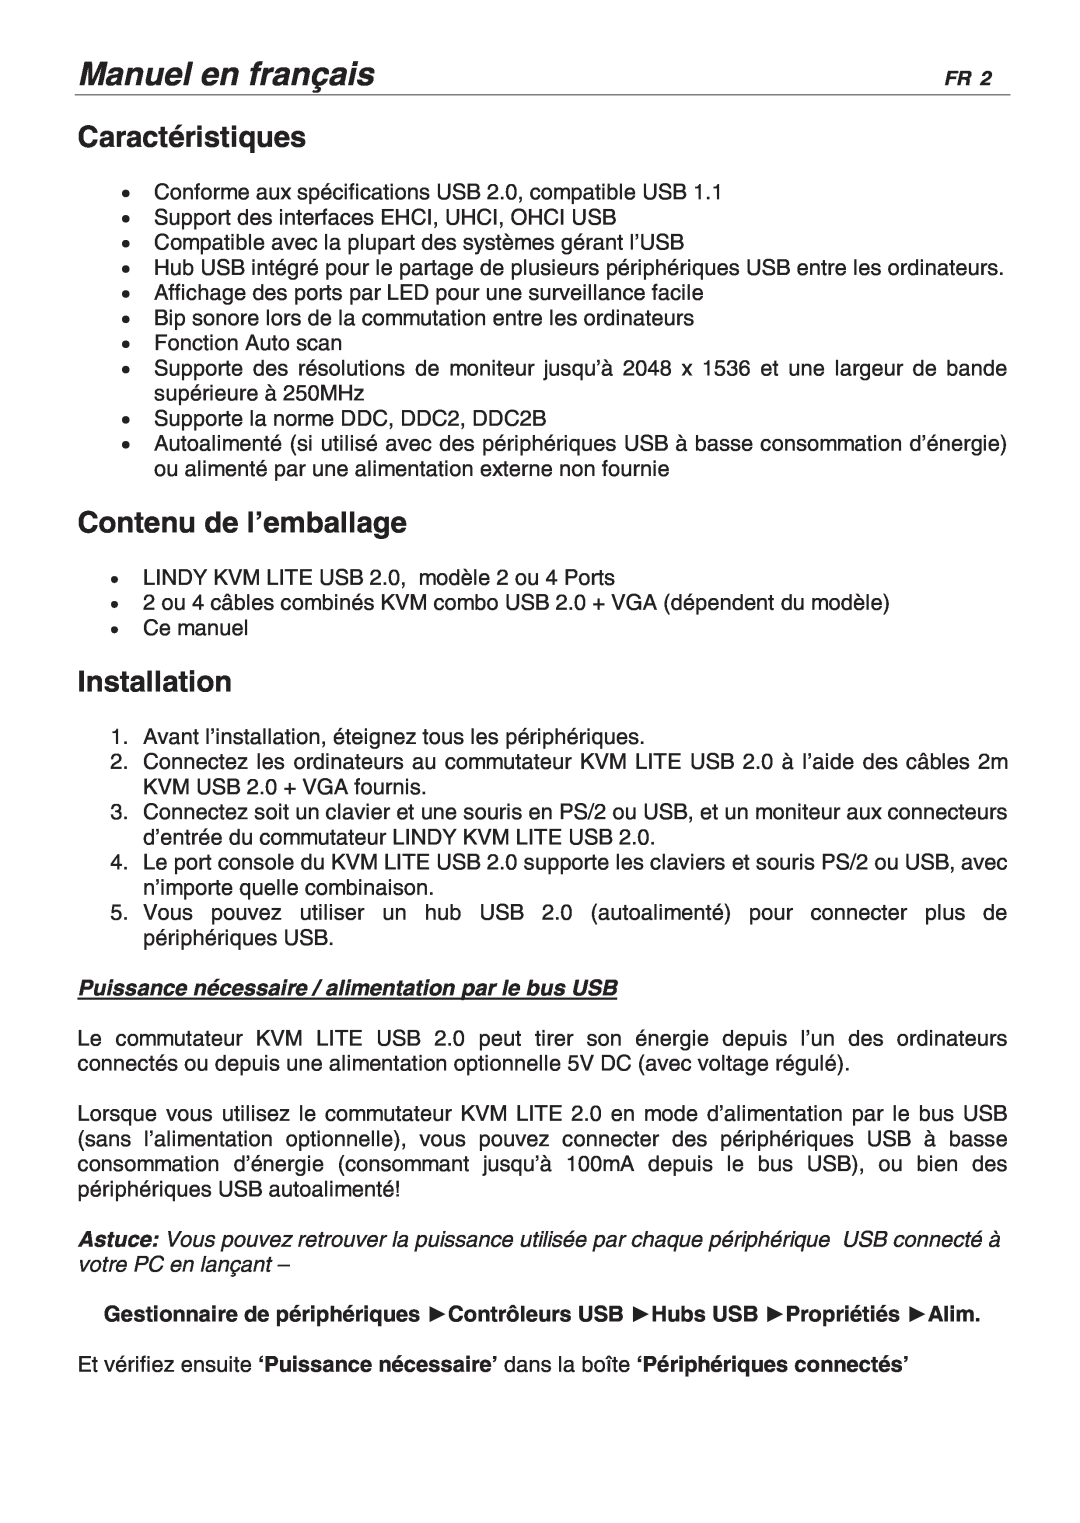 Lindy 32825, 32856 user manual Manuel en français, Caractéristiques, Contenu de l’emballage, Installation 